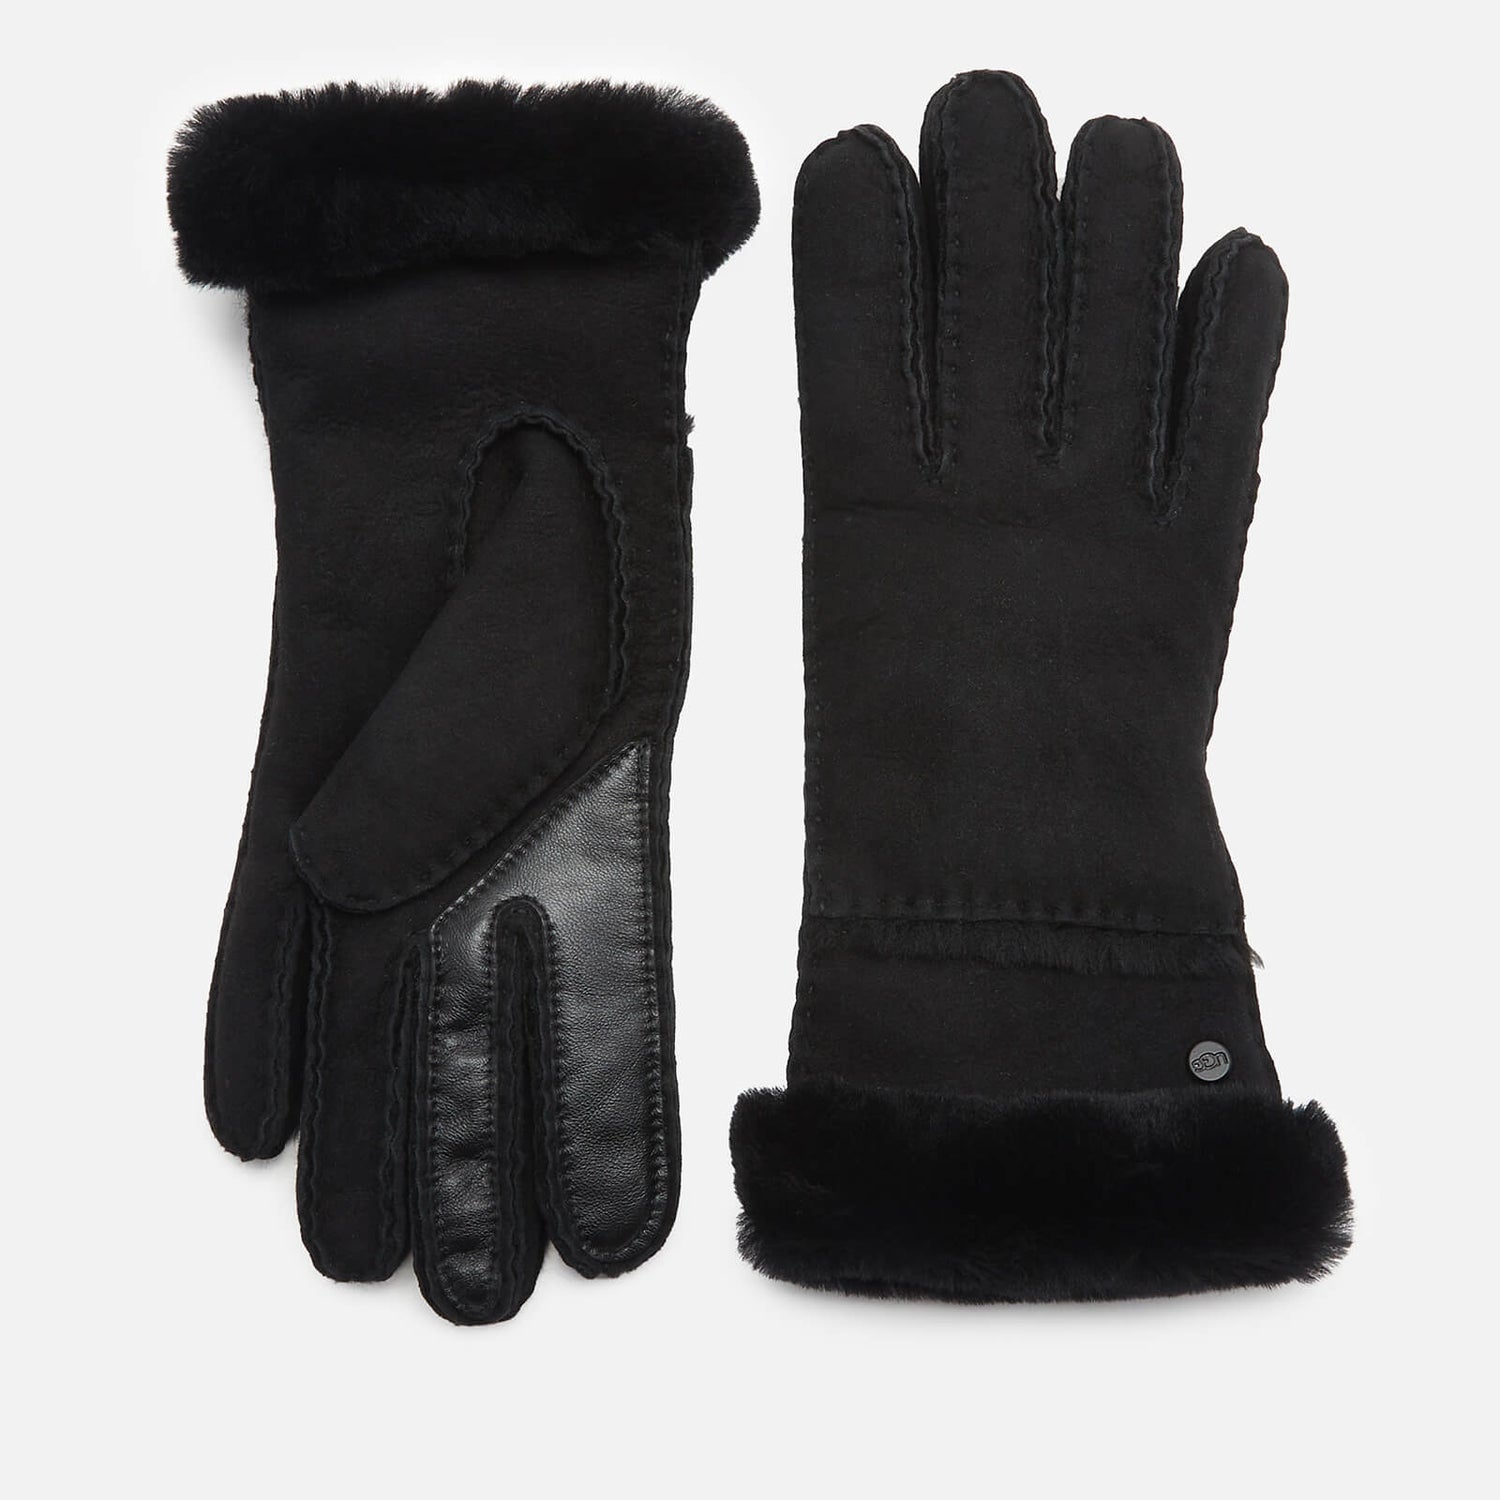 UGG Women's Seamed Tech Glove - Black - L